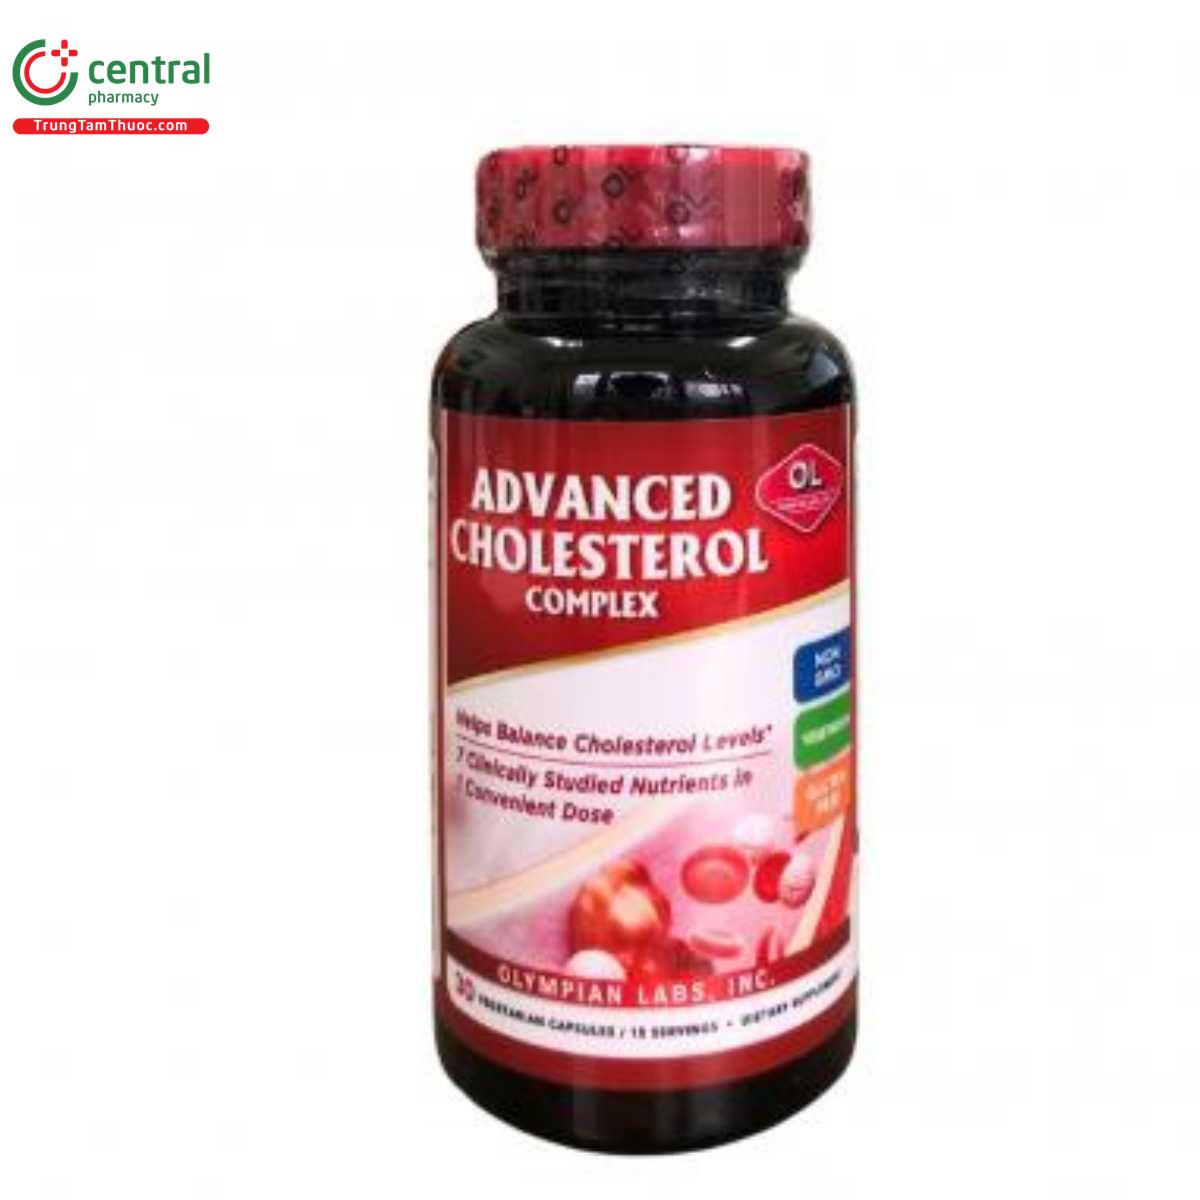 advanced cholesterol 7 C1358